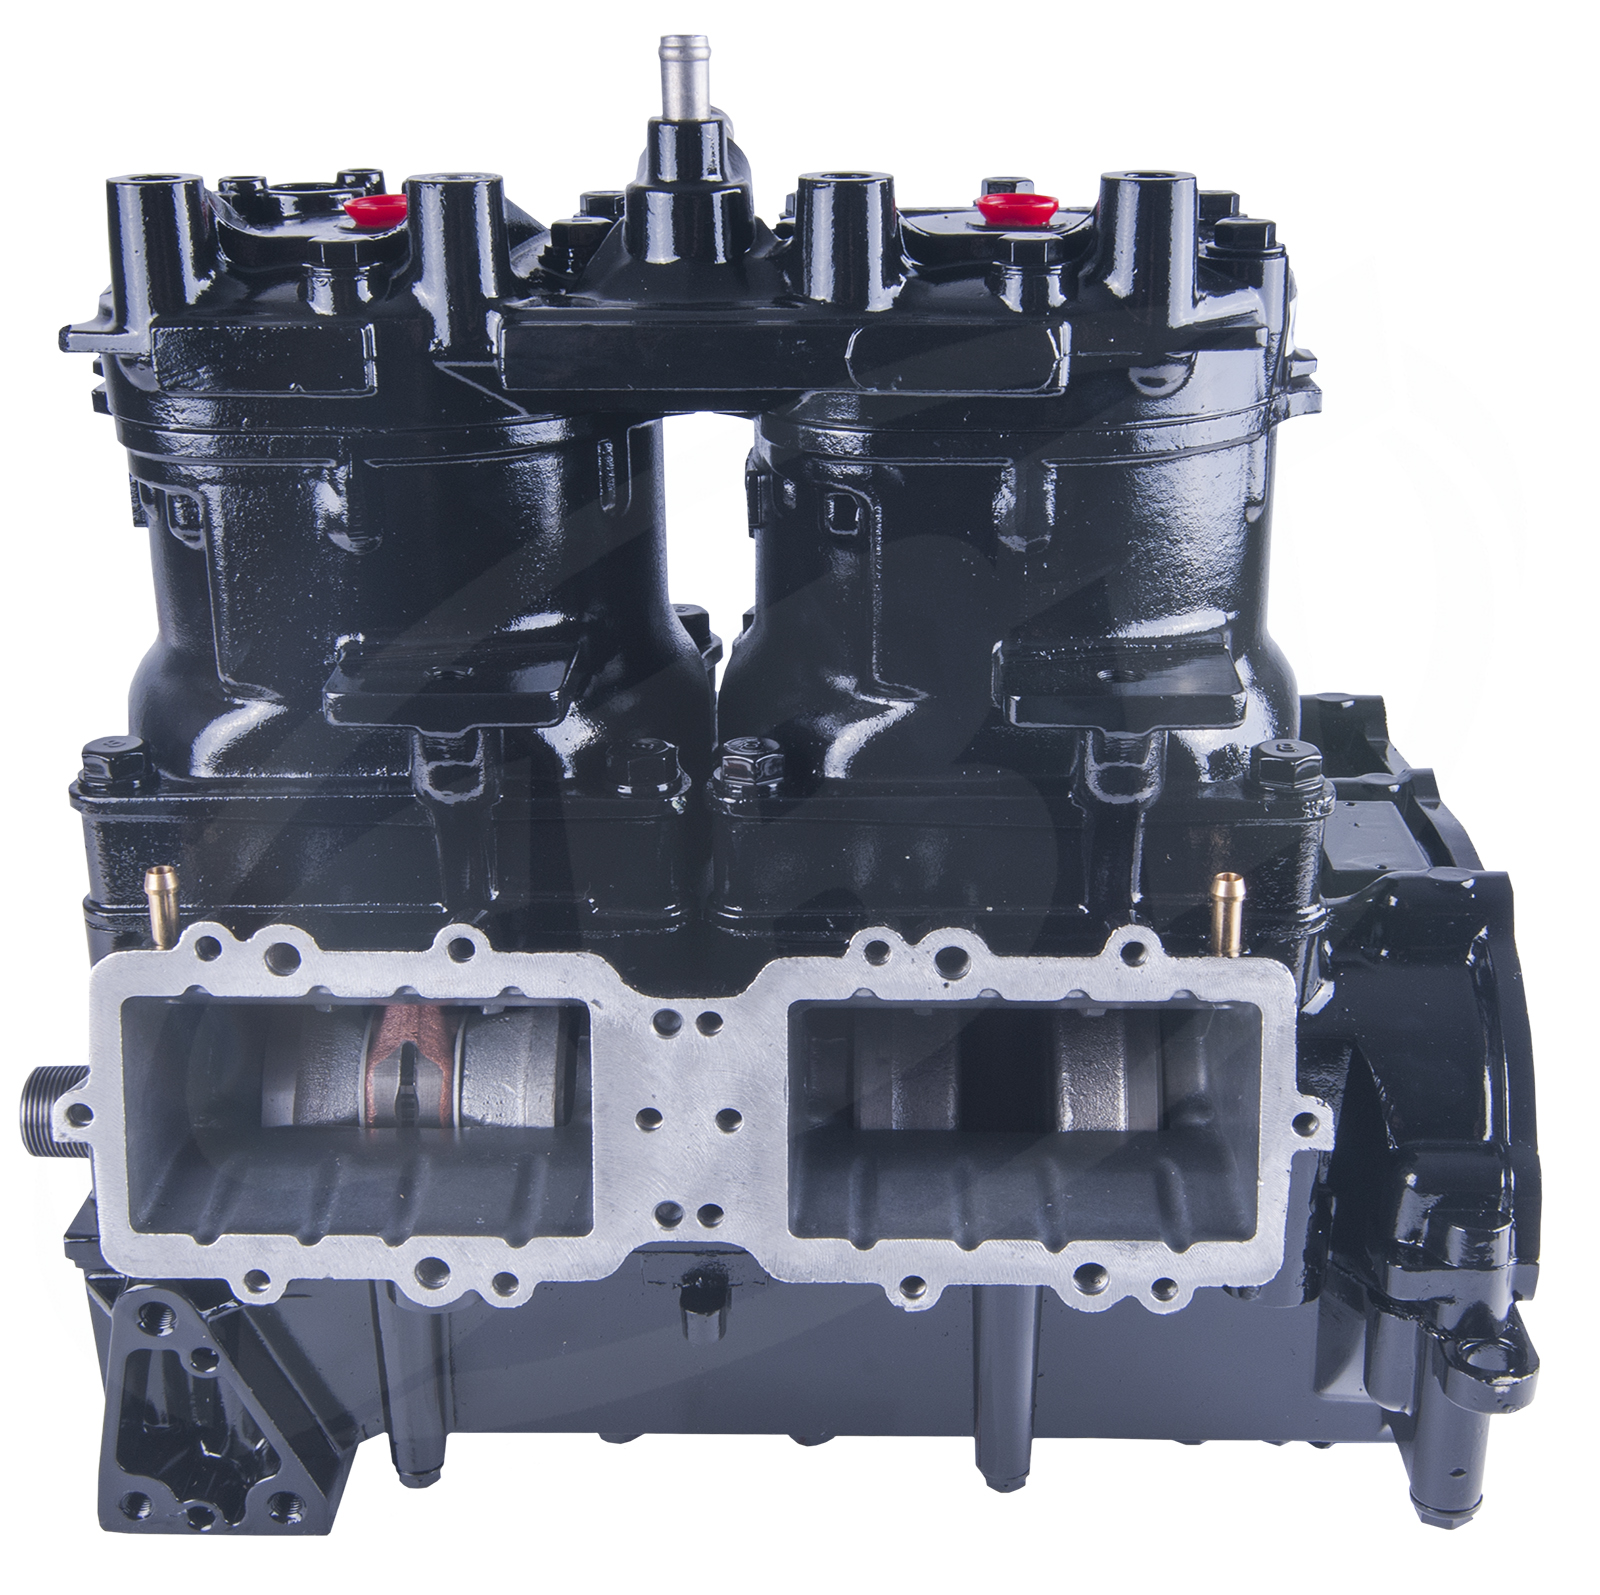 Engine for Yamaha GP800/ GP800R/ XL800/ XLT800: ShopSBT.com